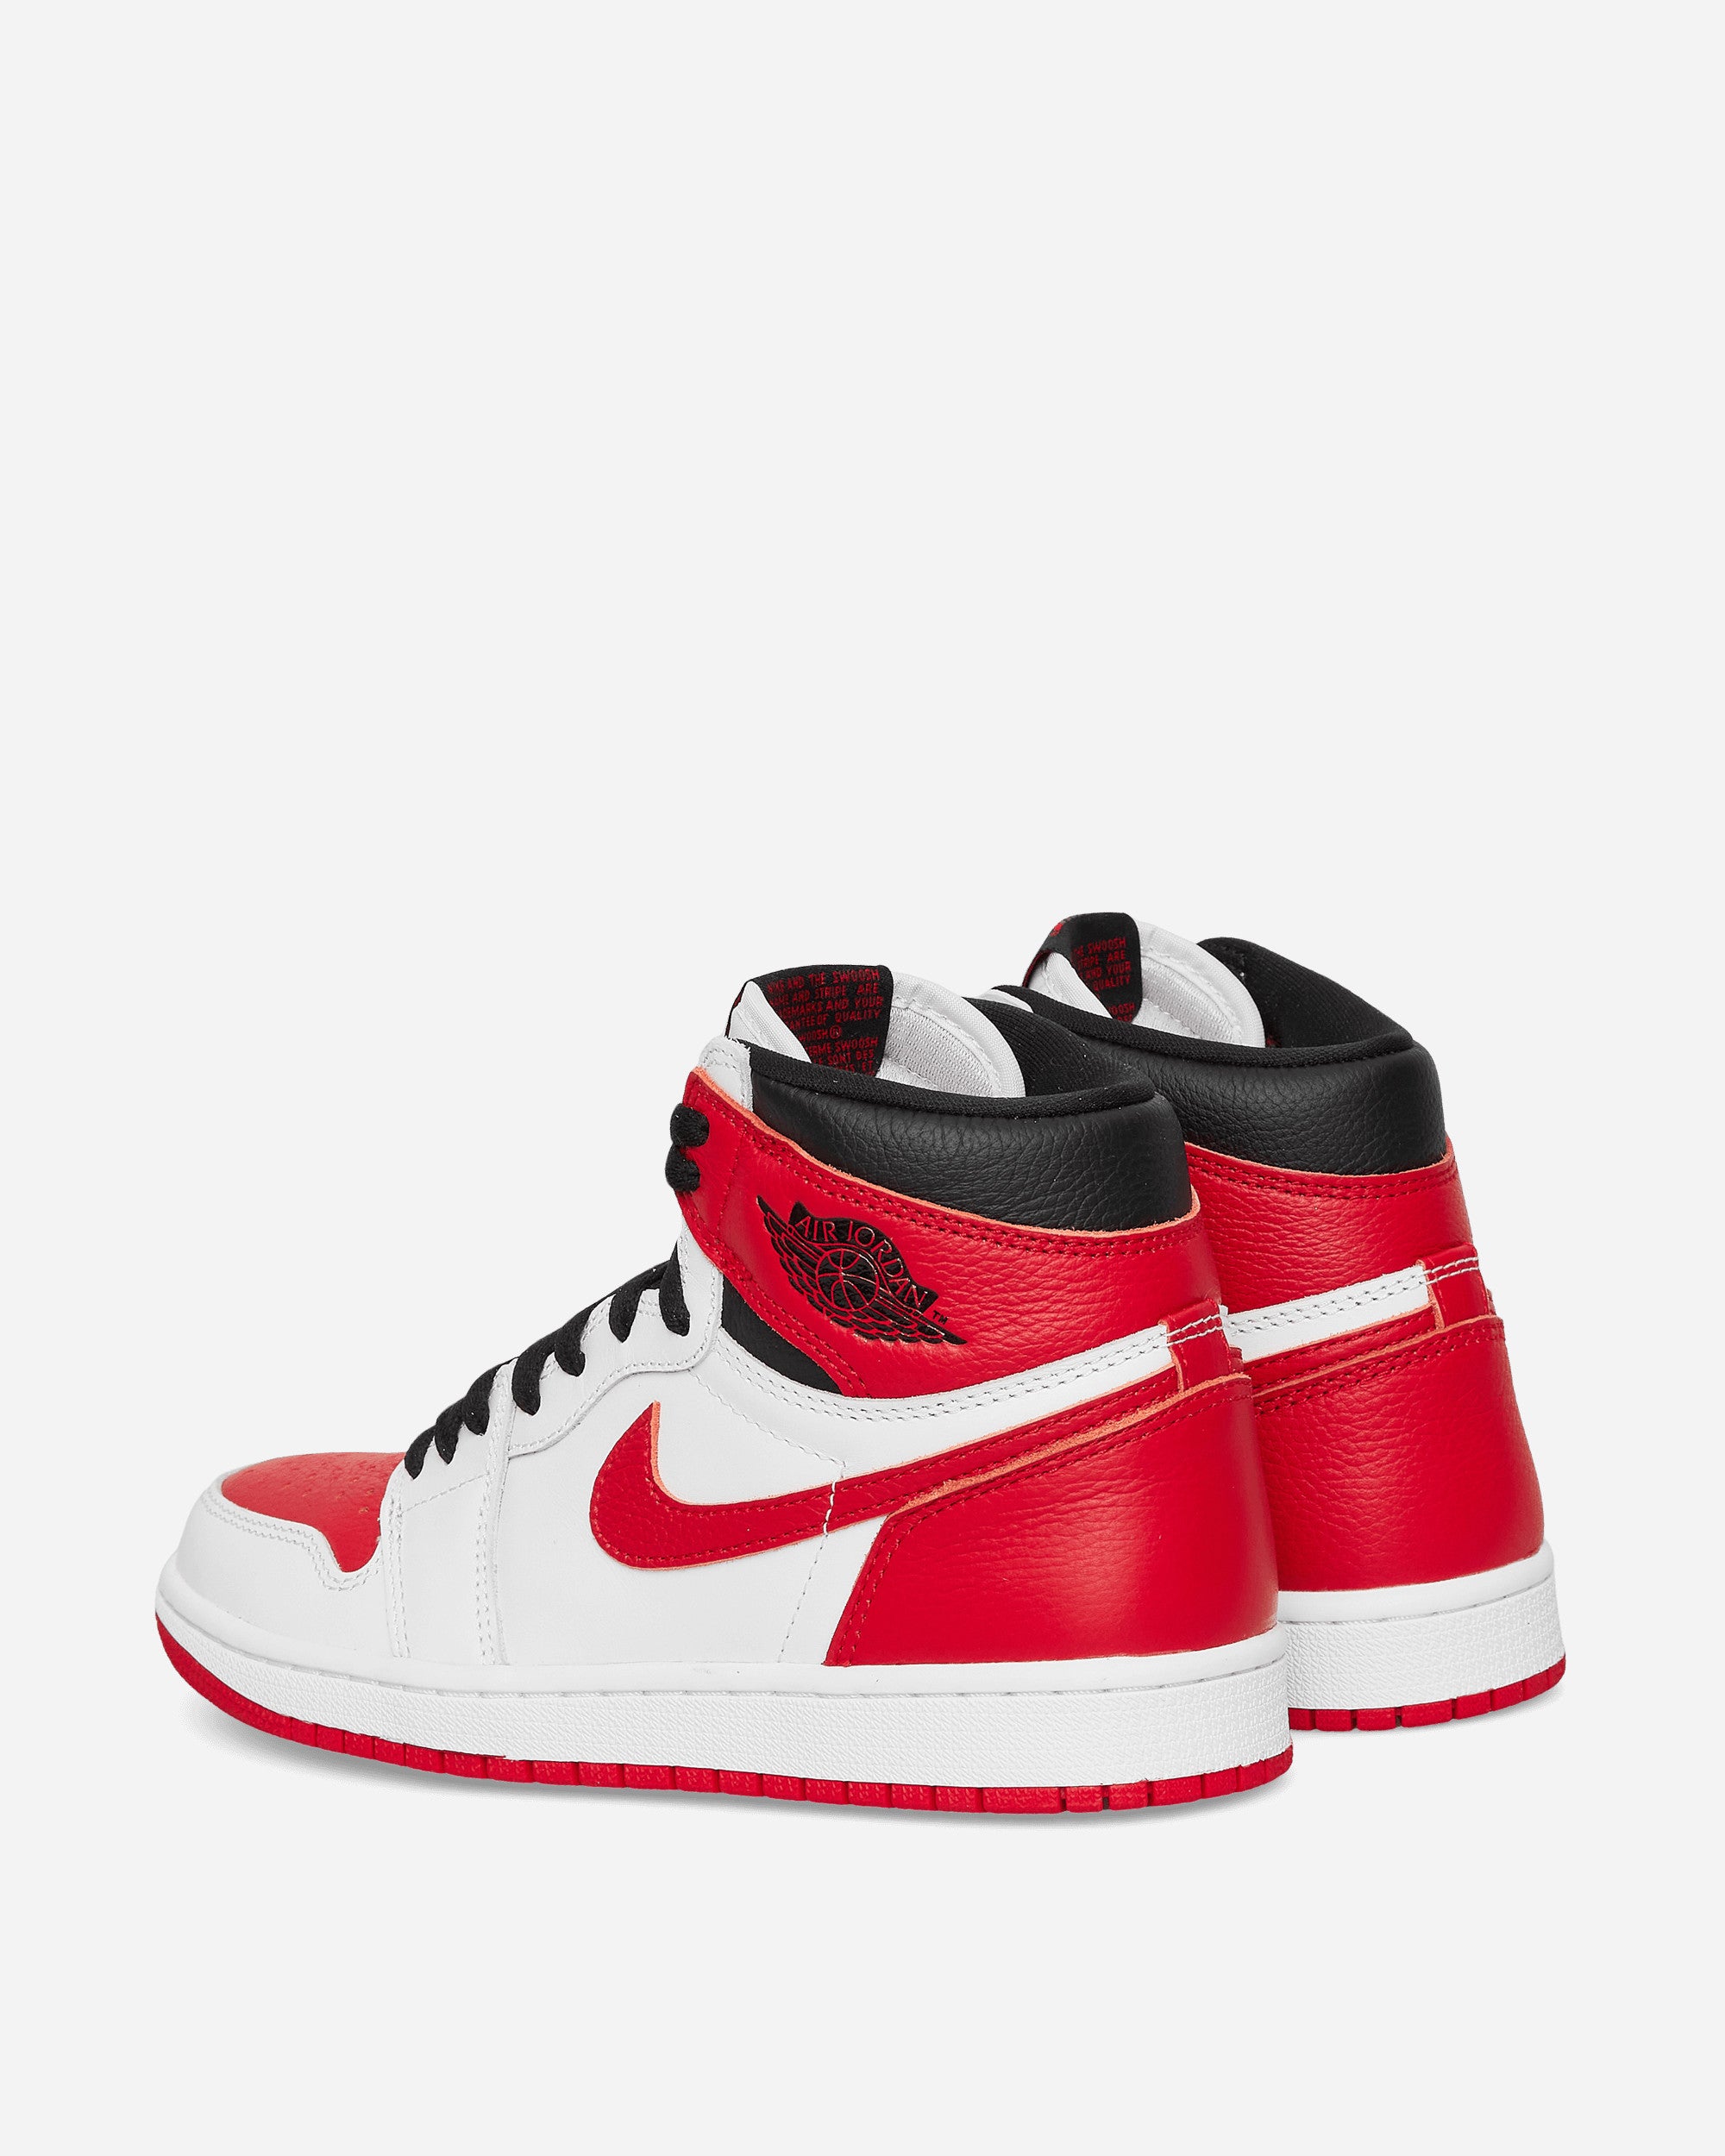 Nike Jordan Air Jordan 1 Retro High Og White/University Red Sneakers High 555088-161